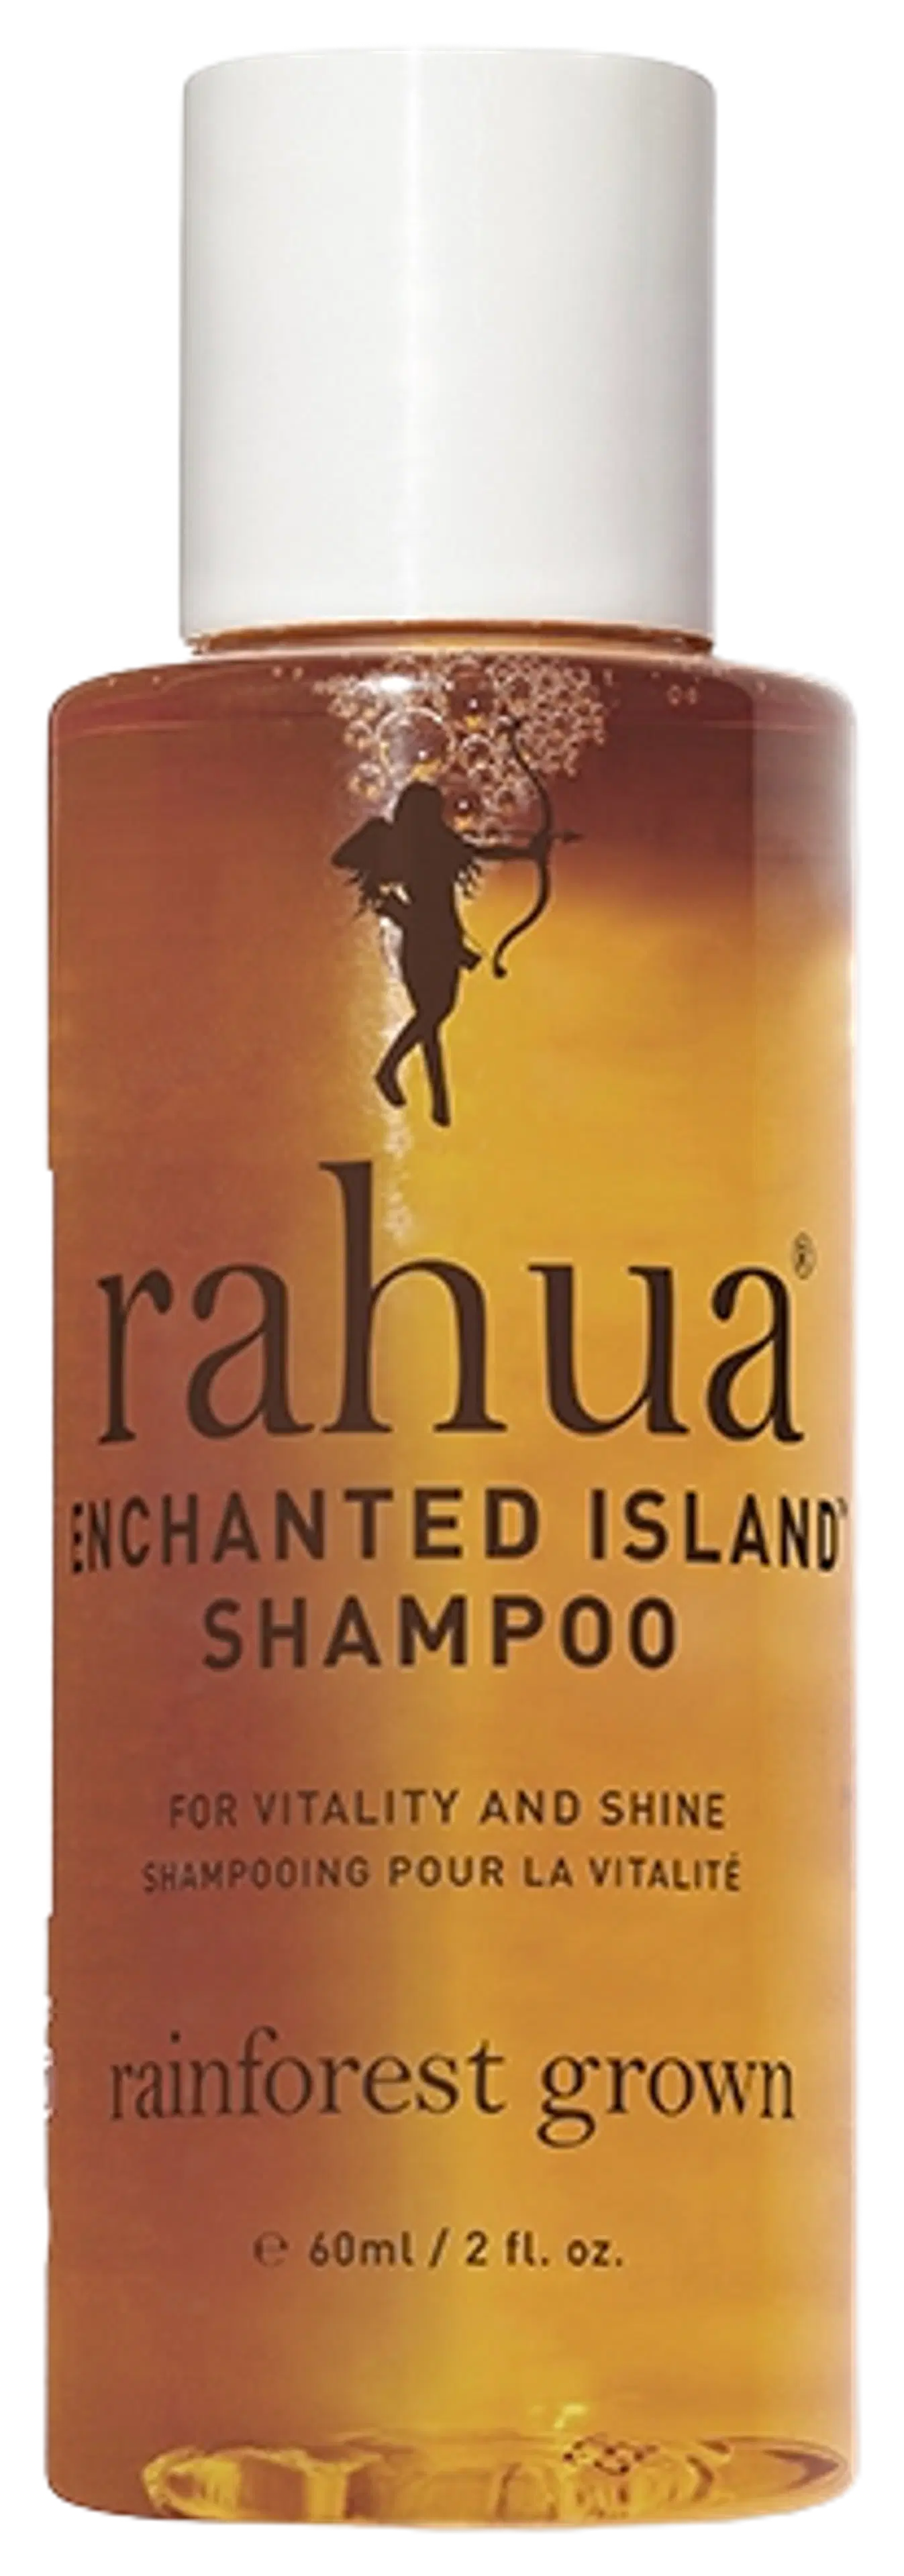 Rahua Enchanted Island Shampoo 60 ml  